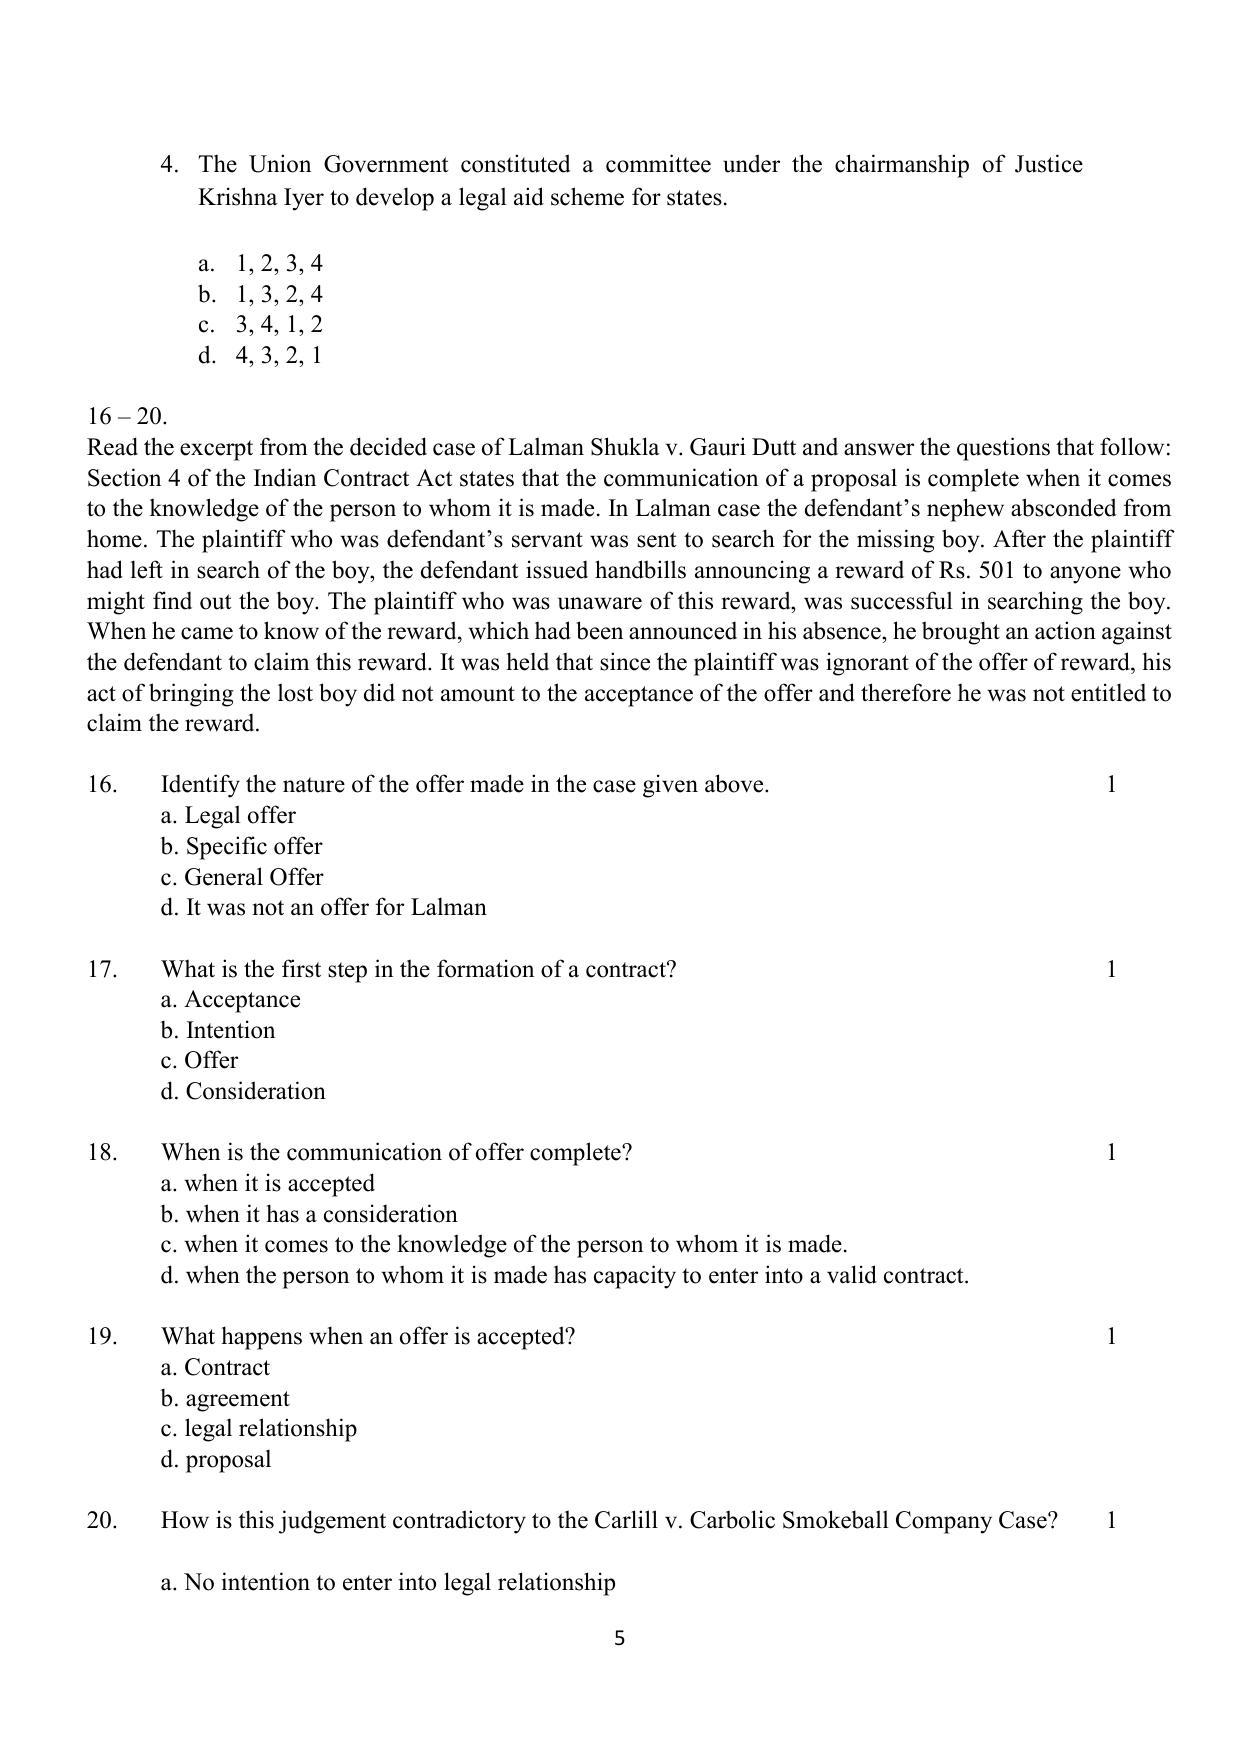 CBSE Class 12 Legal Studies Sample Paper 2023 - Page 5